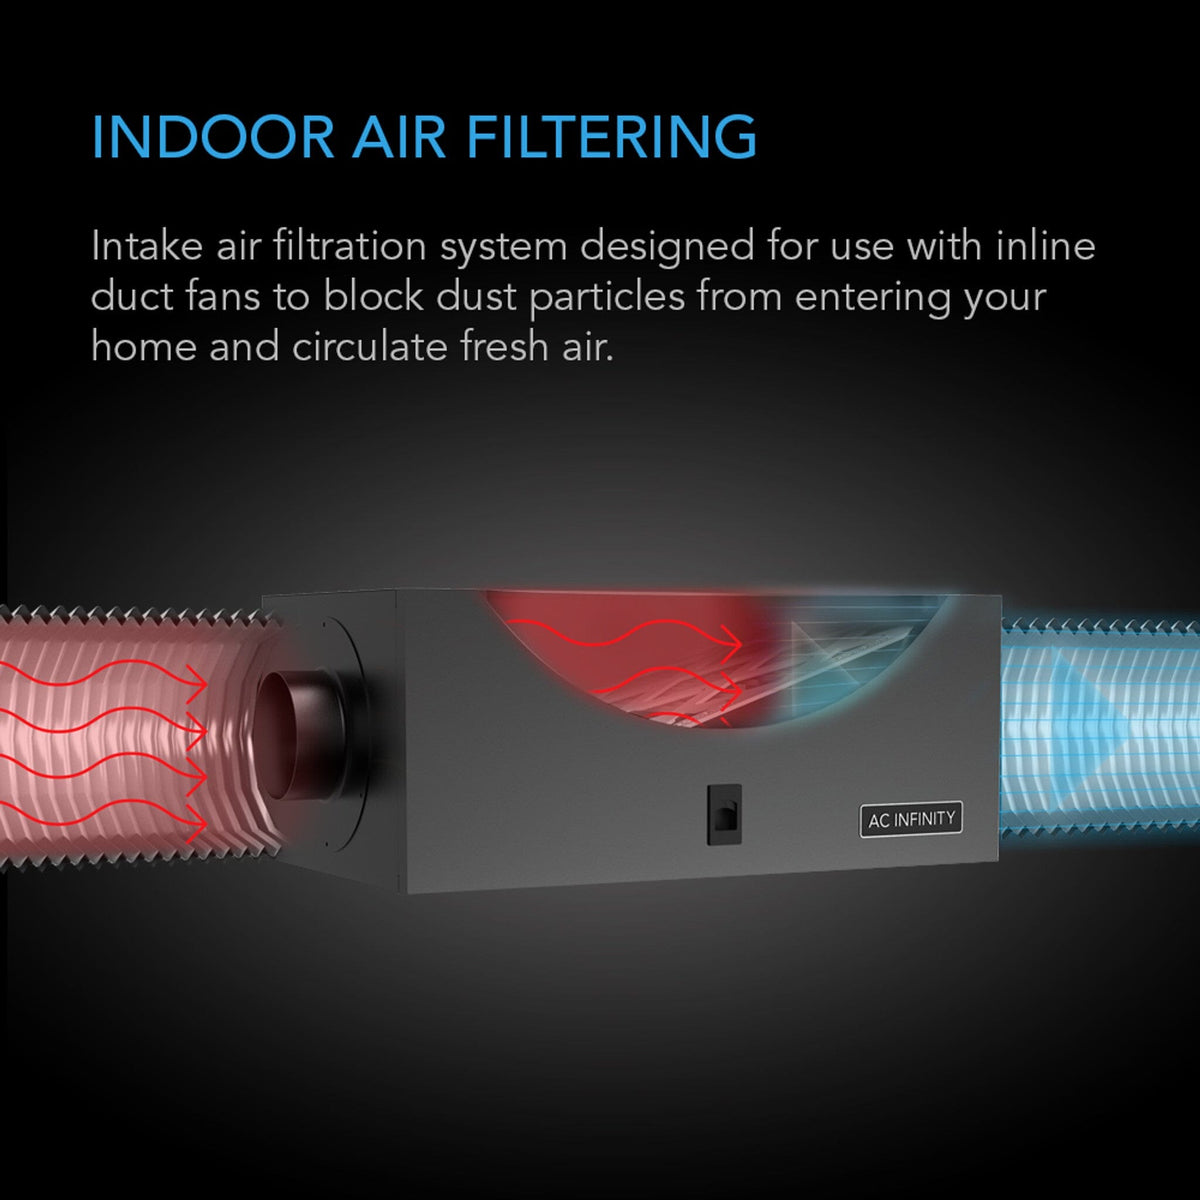 Indoor air filtering box